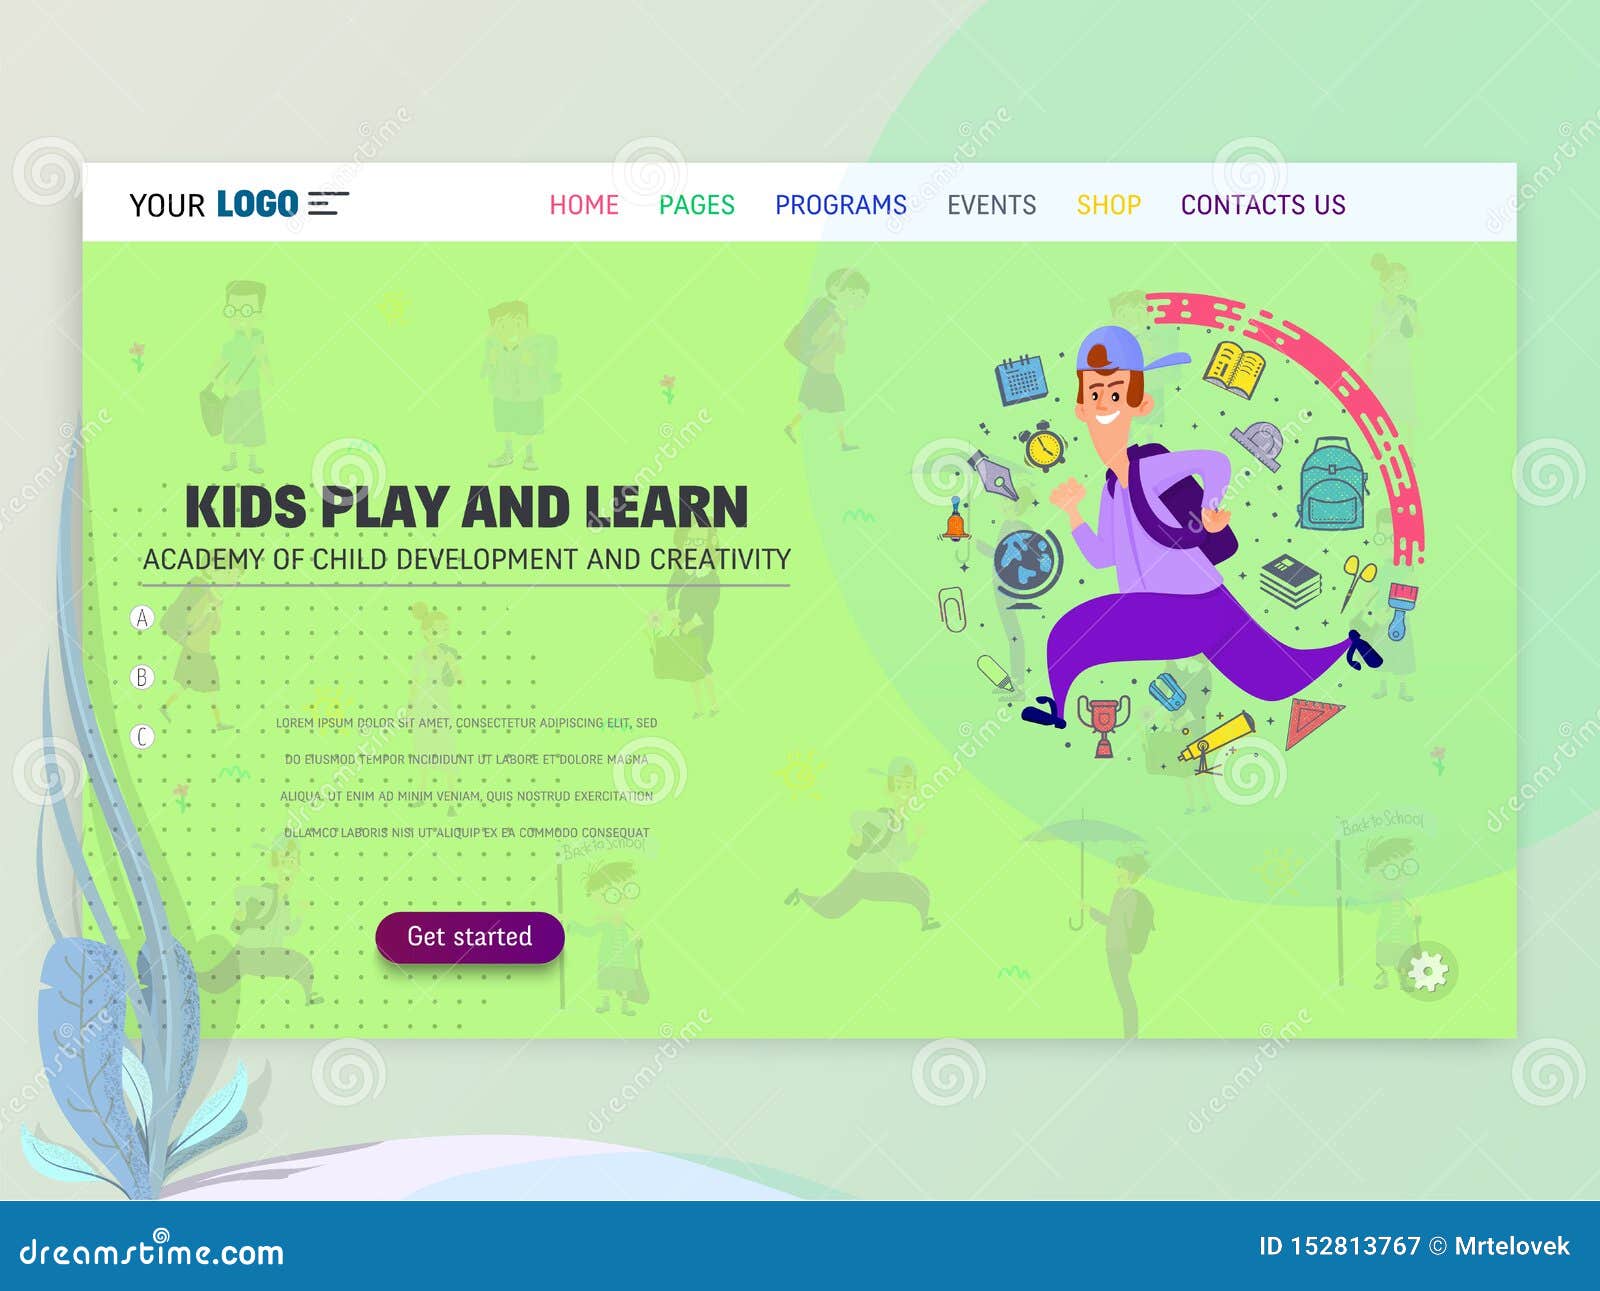 Homepage - All Kids Play